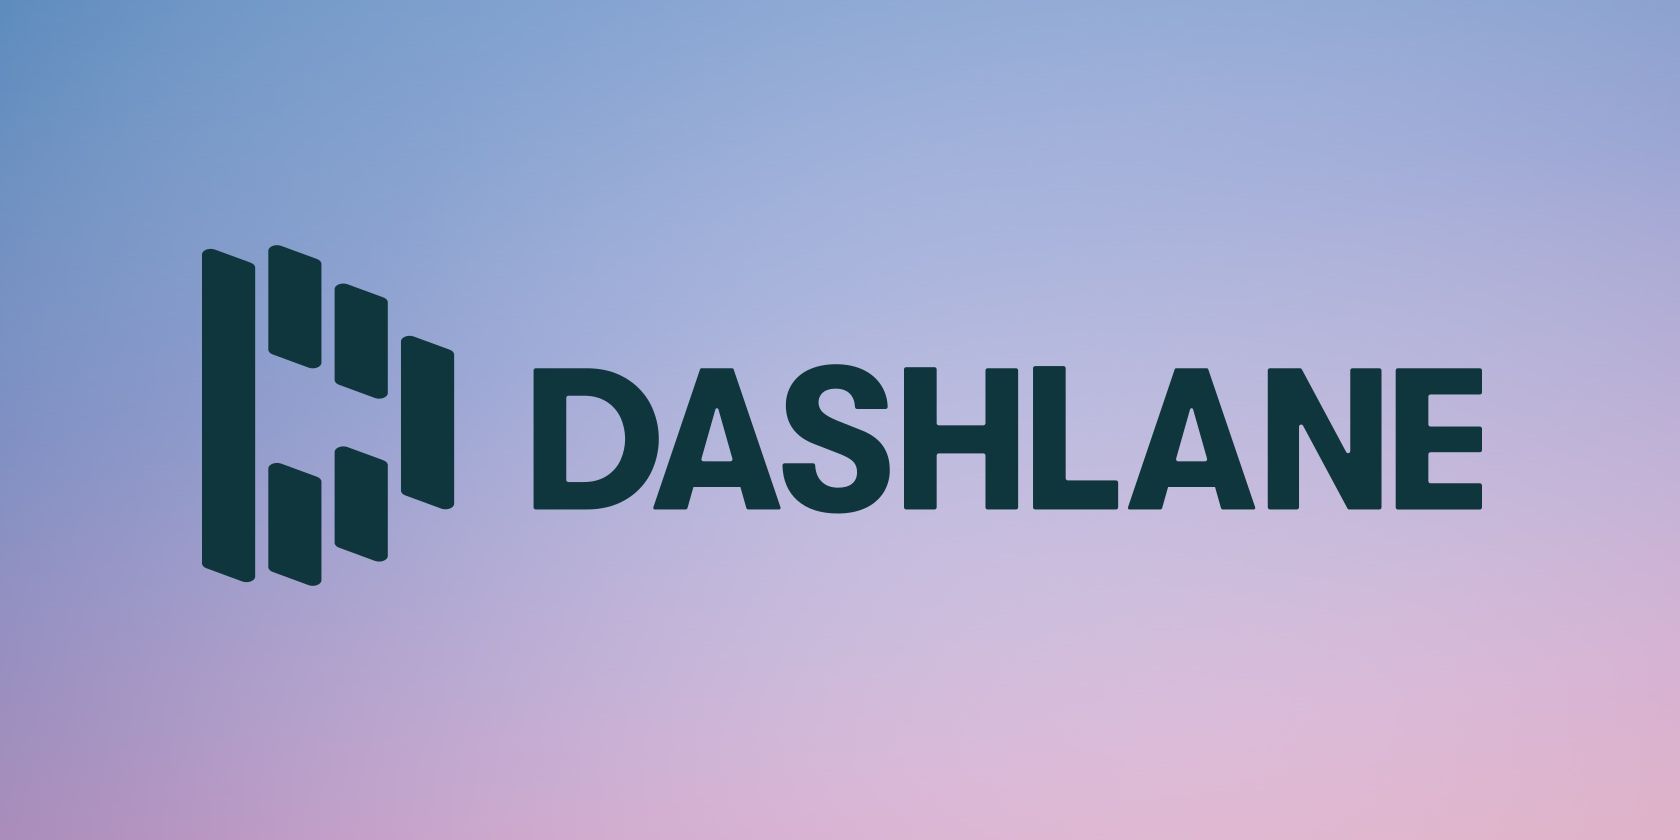 The Dashlane logo